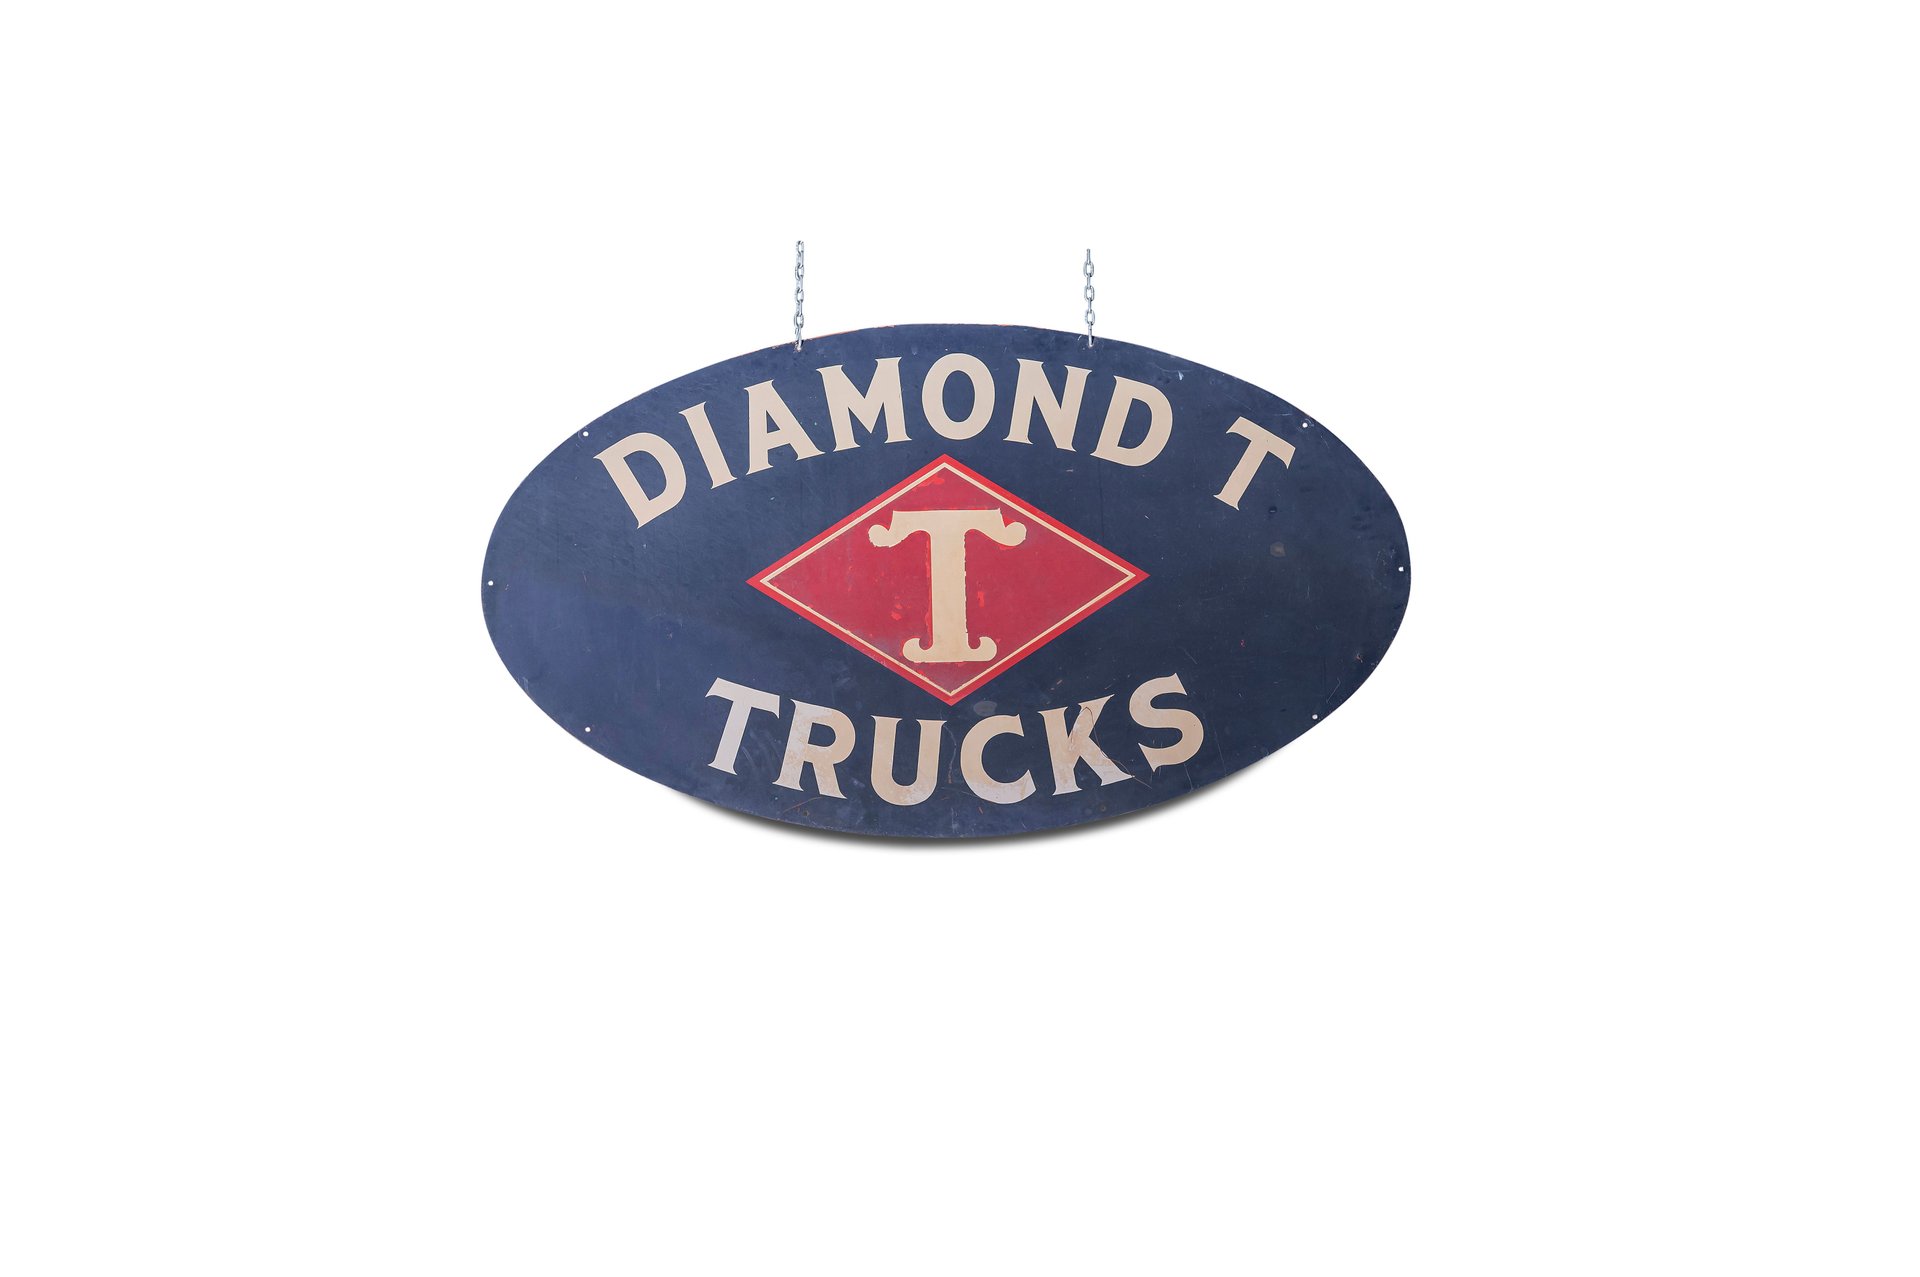 For Sale 'Diamond T Trucks Dealership' Painted Metal Sign